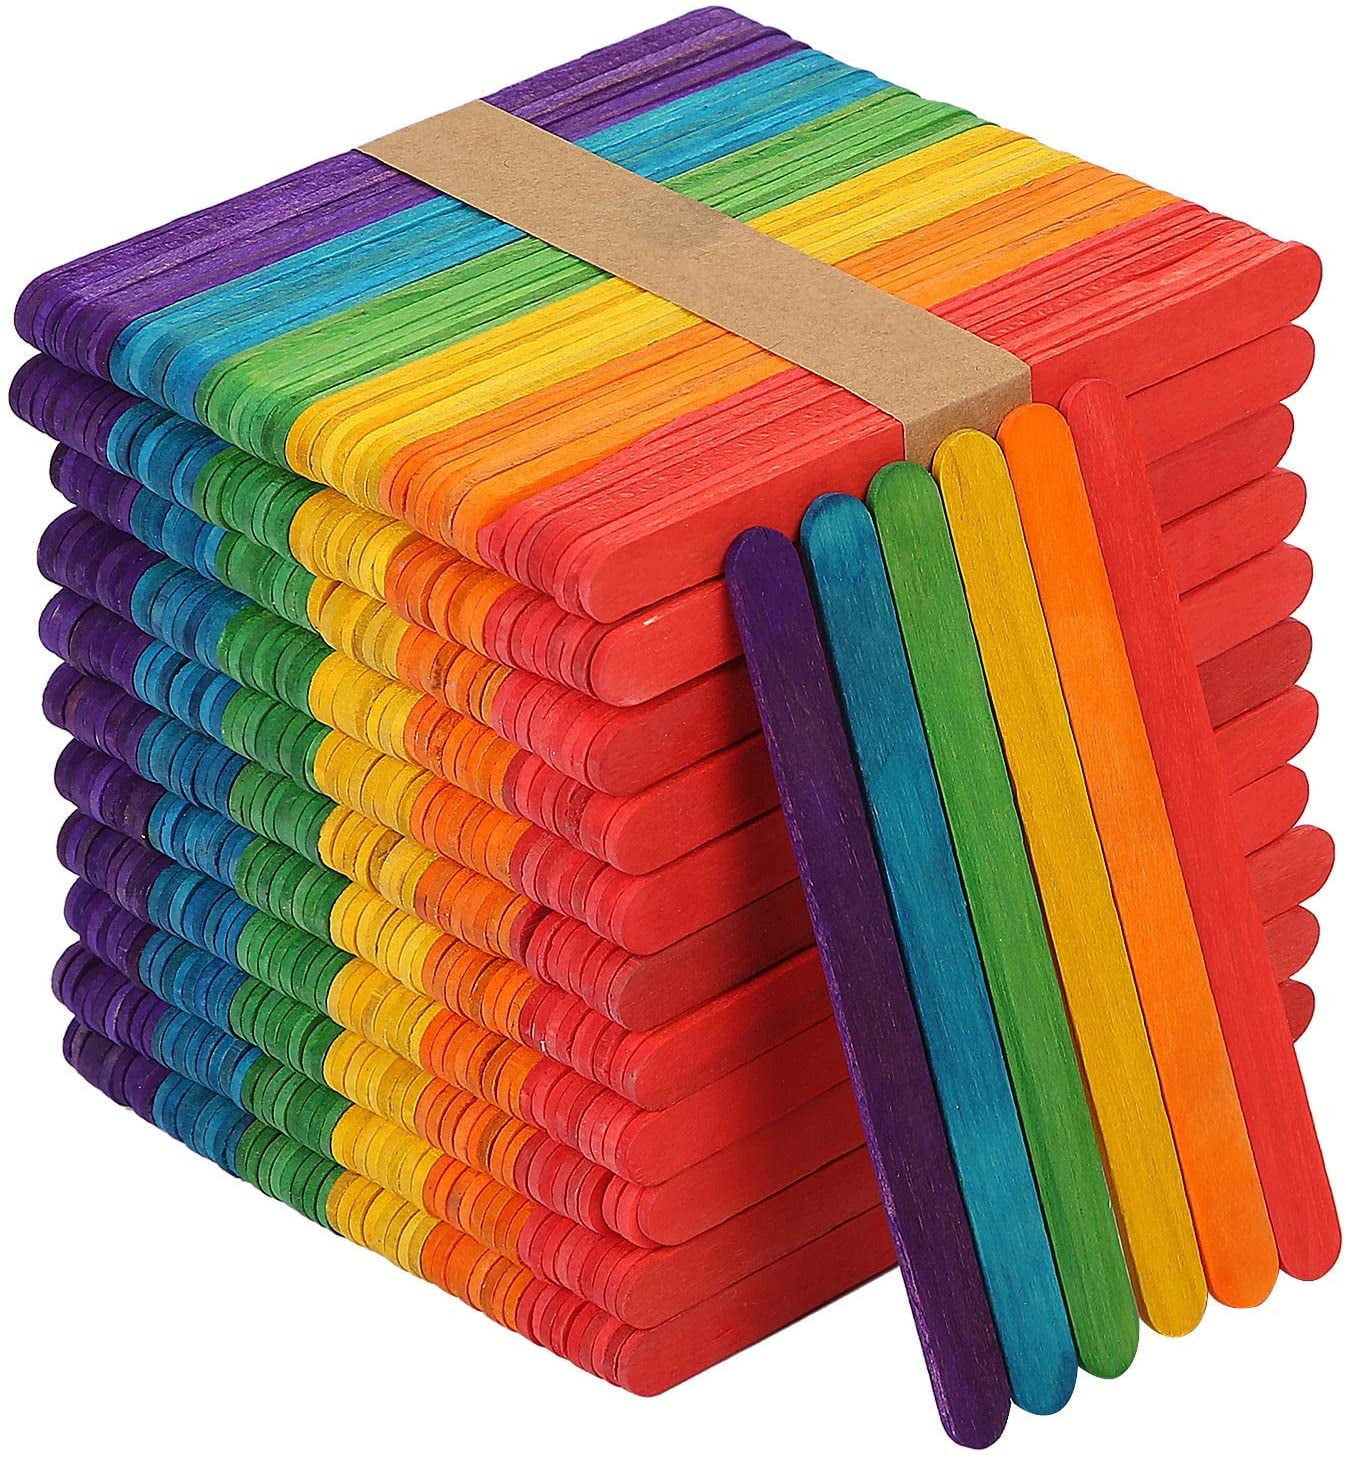 Bazic Colored Craft Sticks - 100/Pack